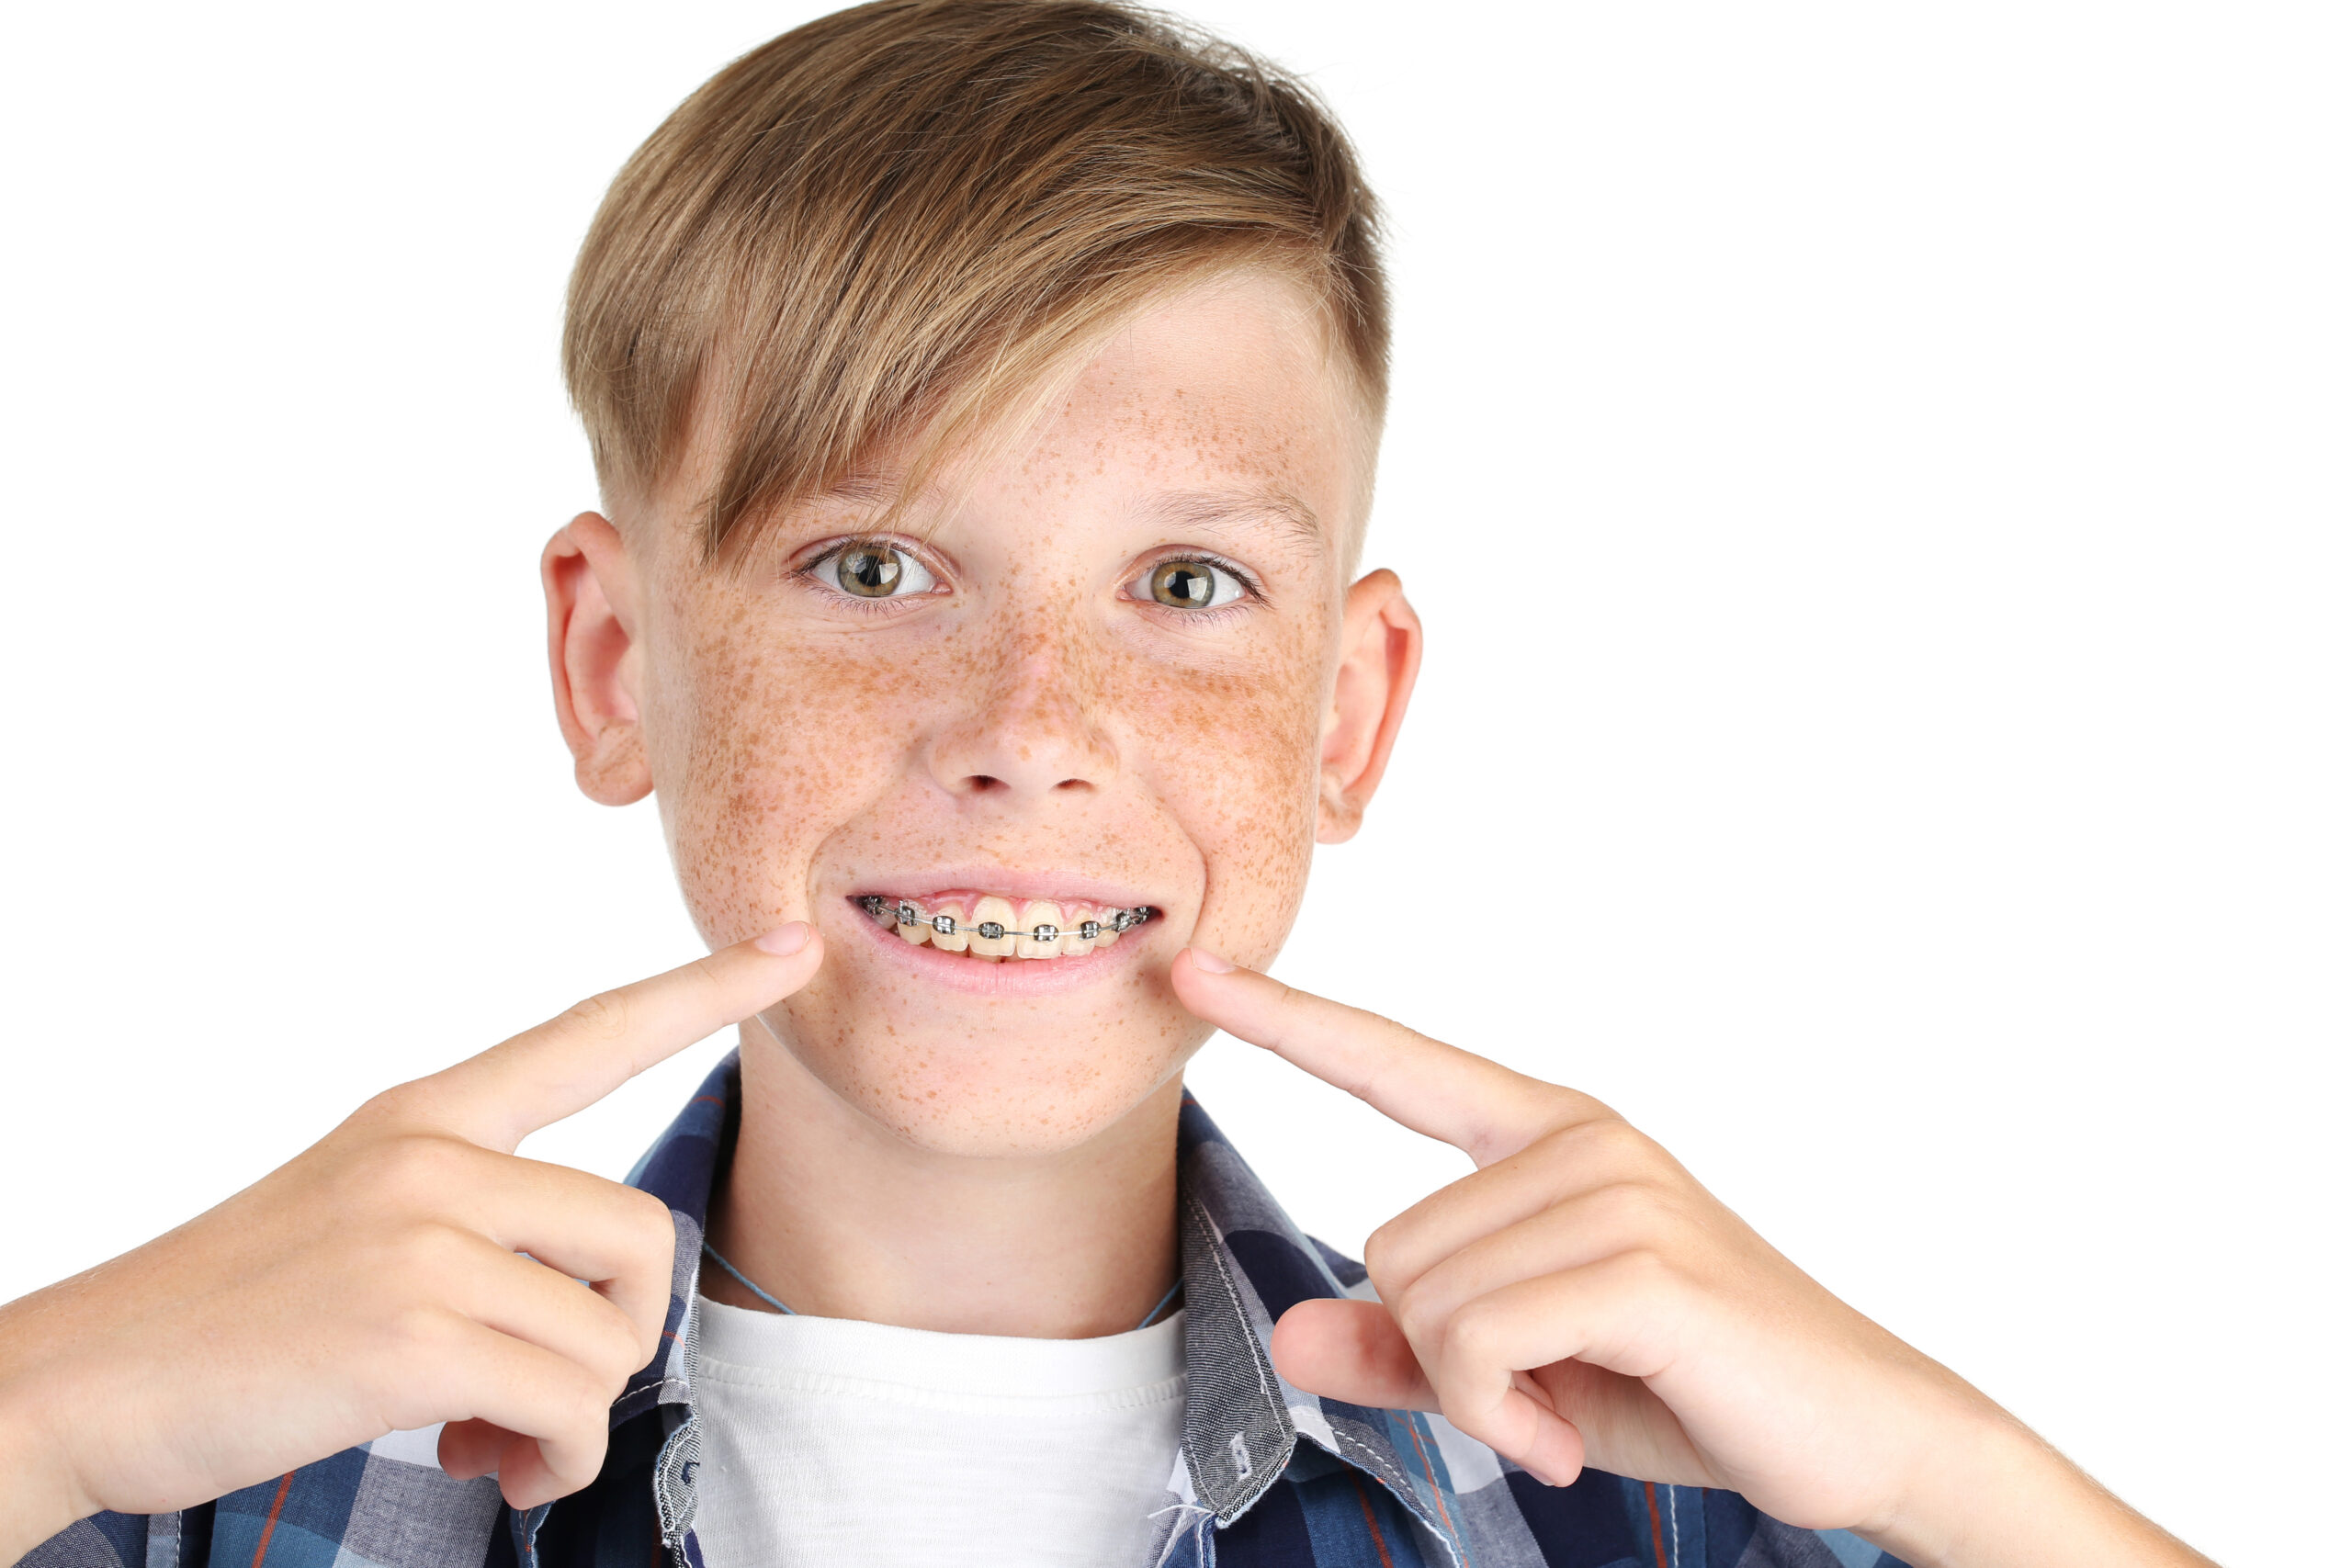 shirley orthodontics for kids